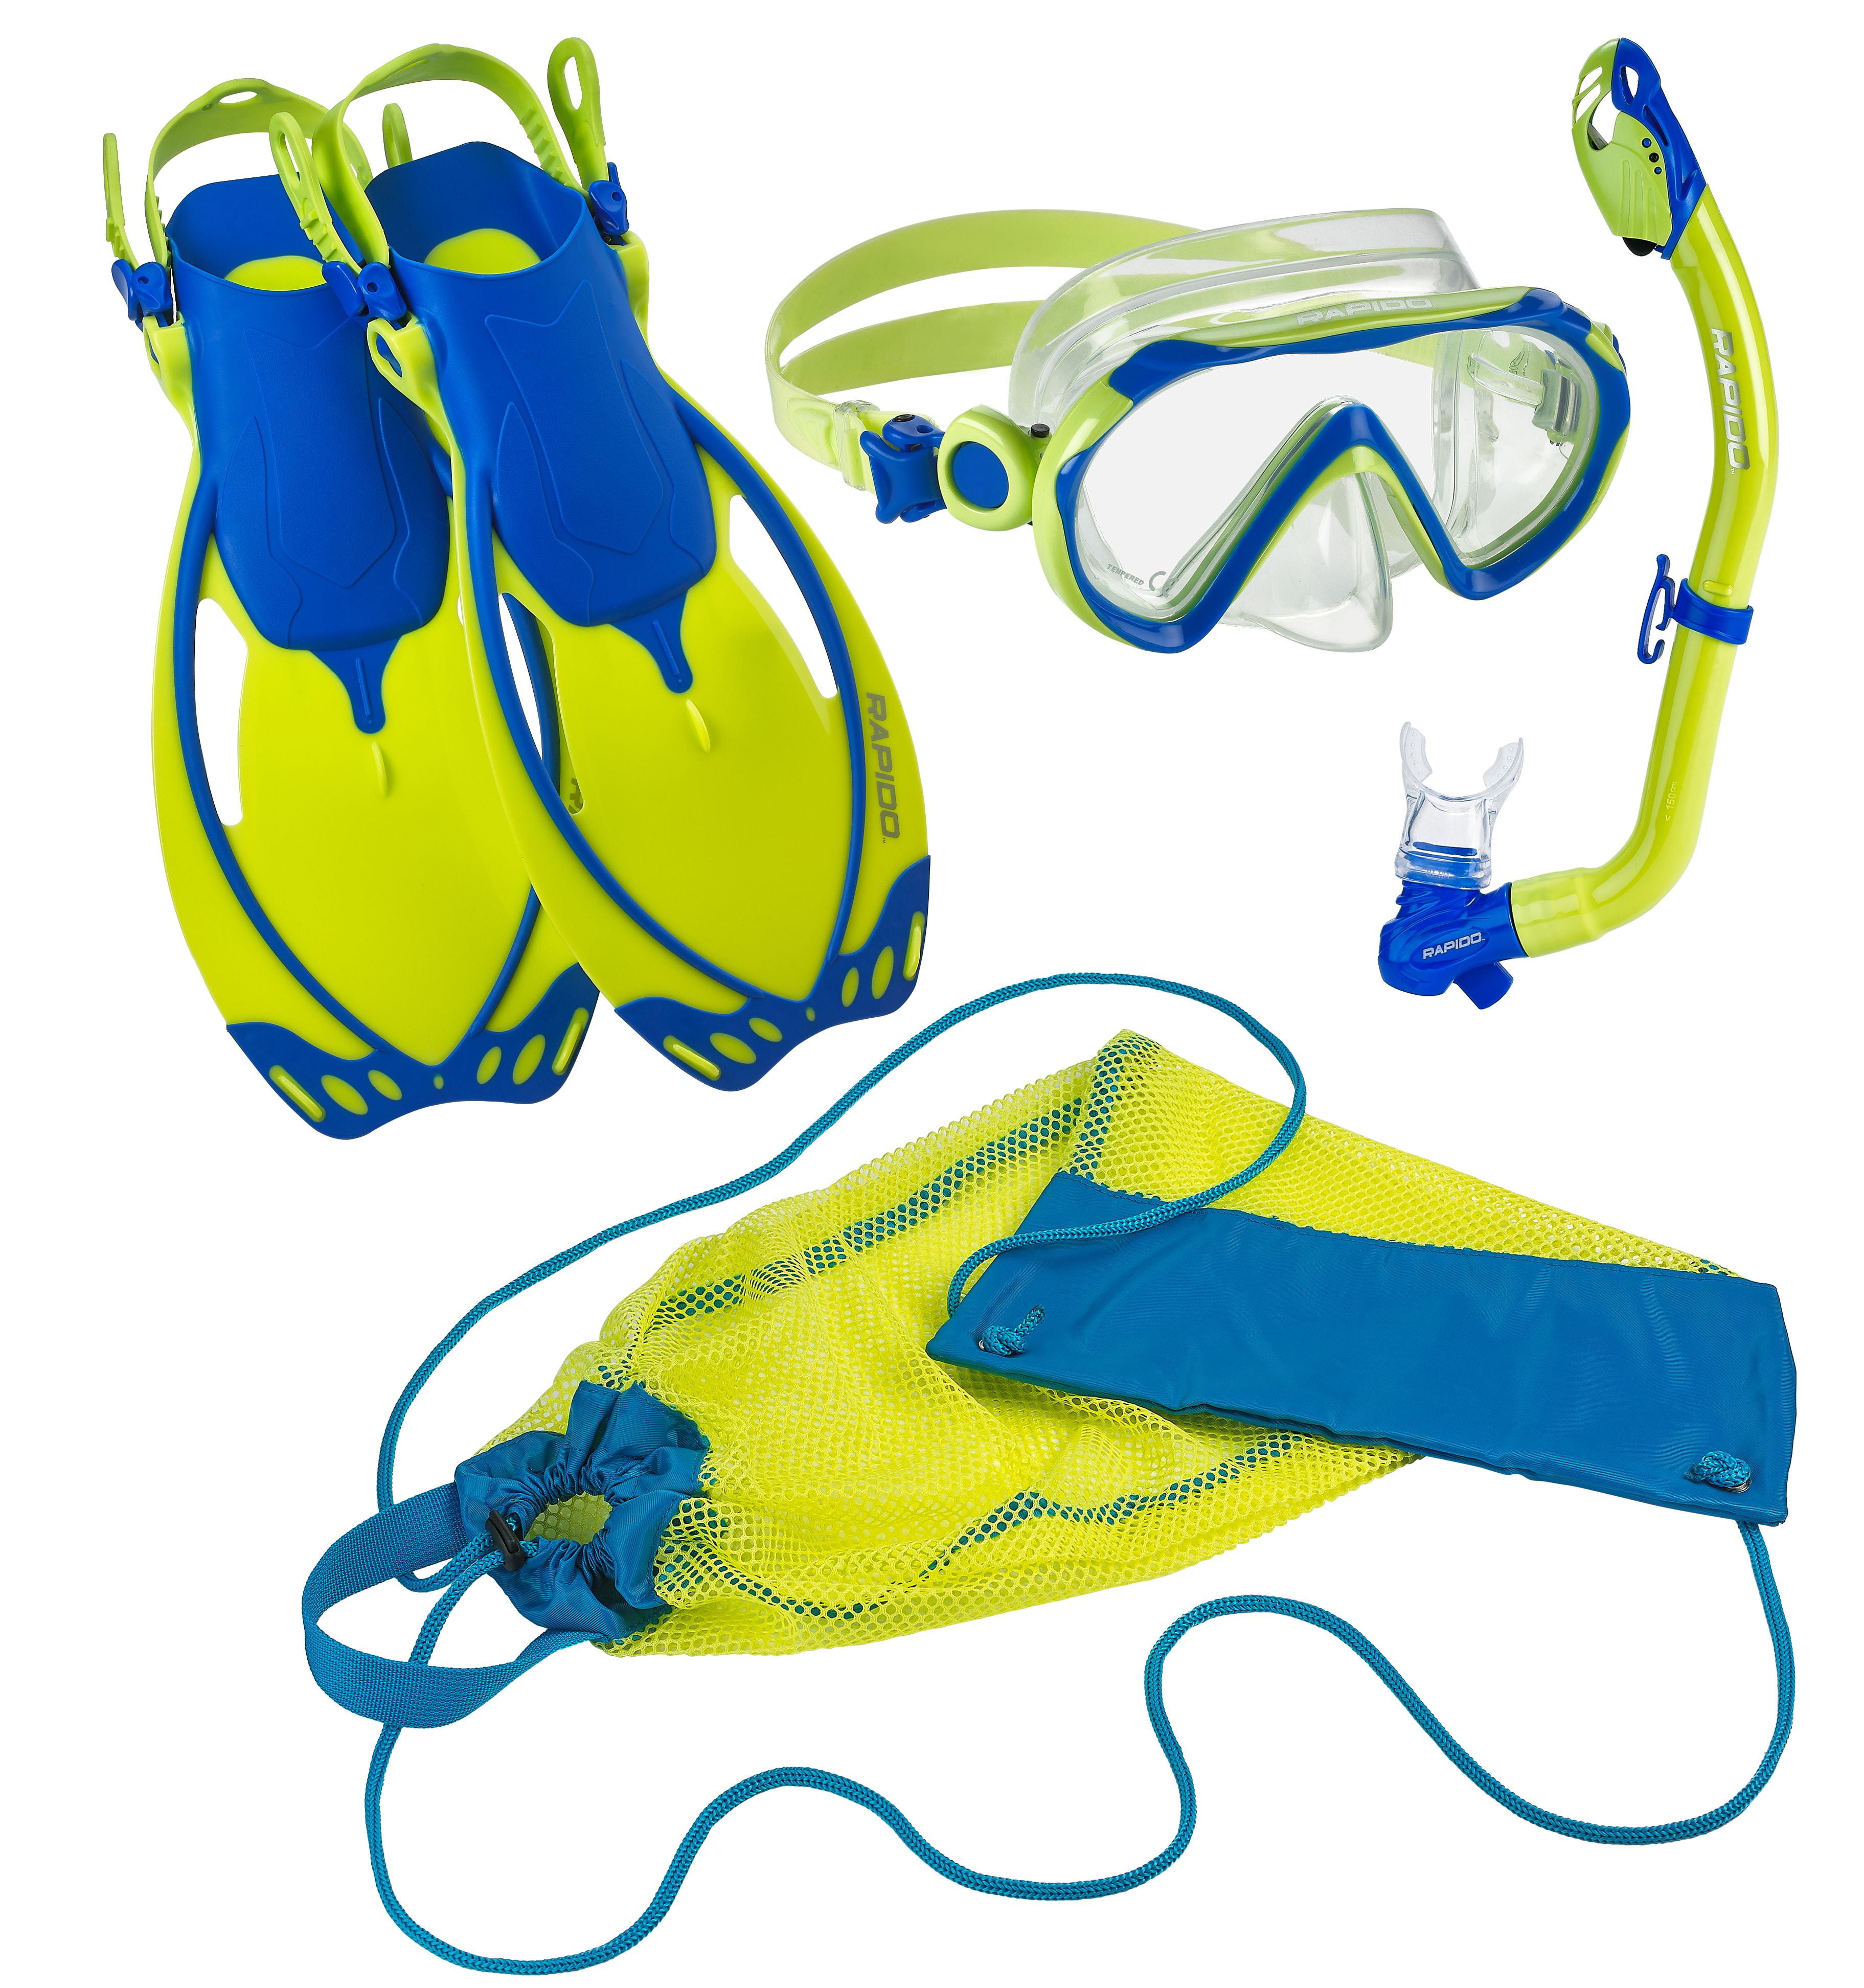 Dry Snorkel Set Mask Snorkel Set for Scuba & Snorkeling Phantom Aquatics Tempered Glass Snorkel Mask